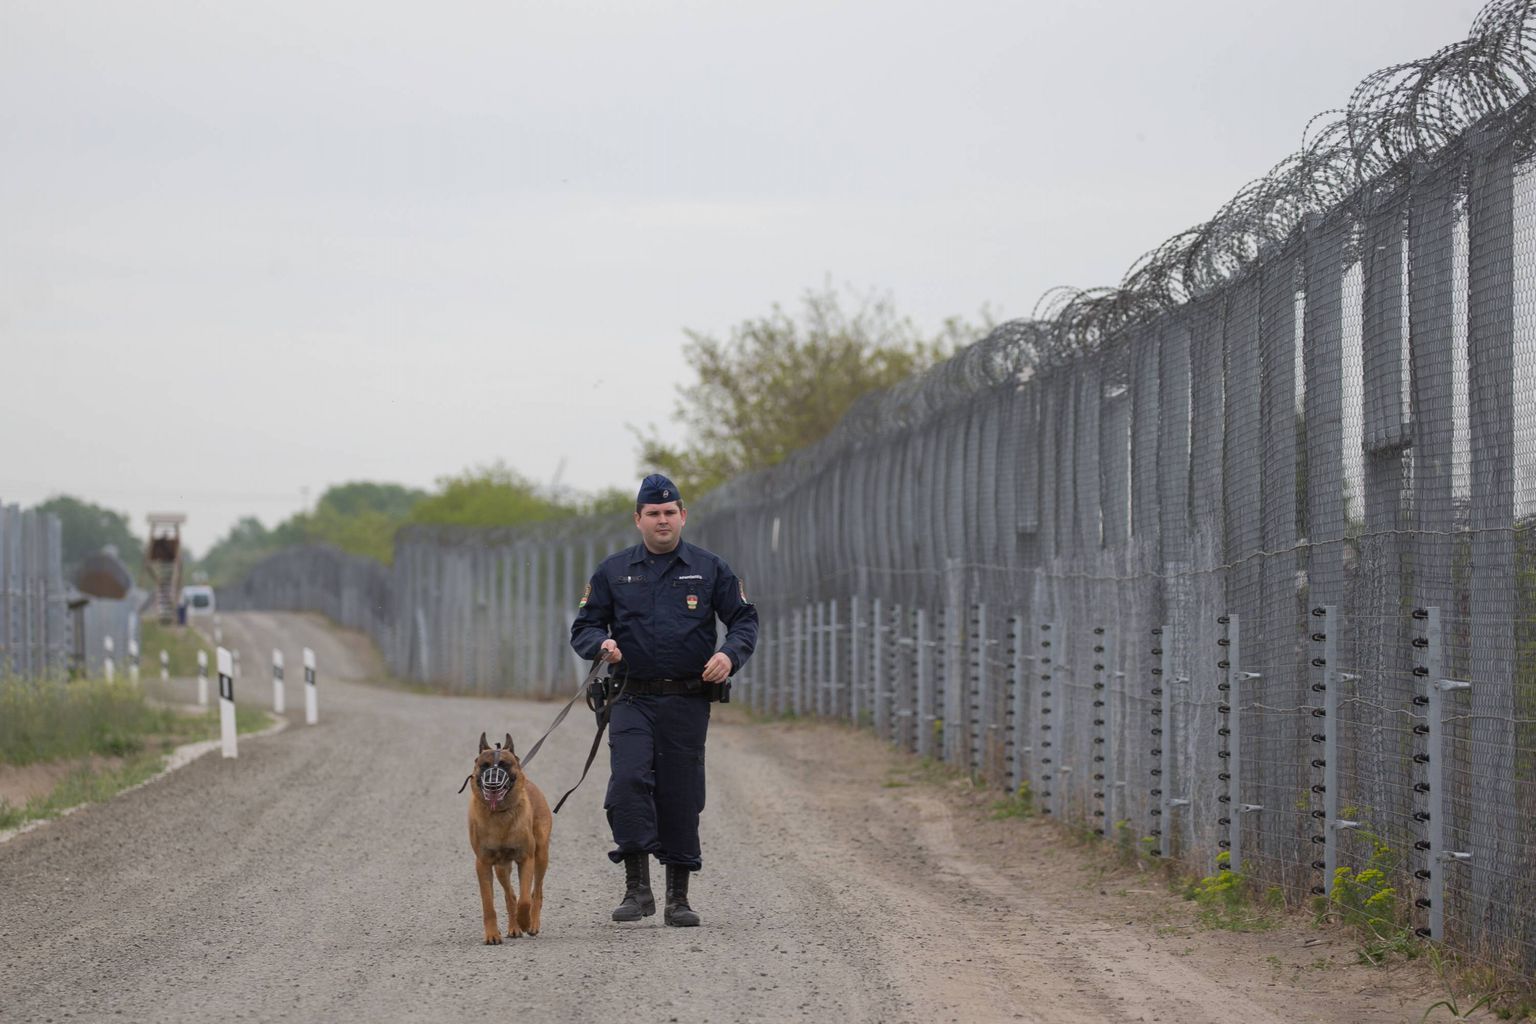 Ungari politseinik piiritara valvamas.